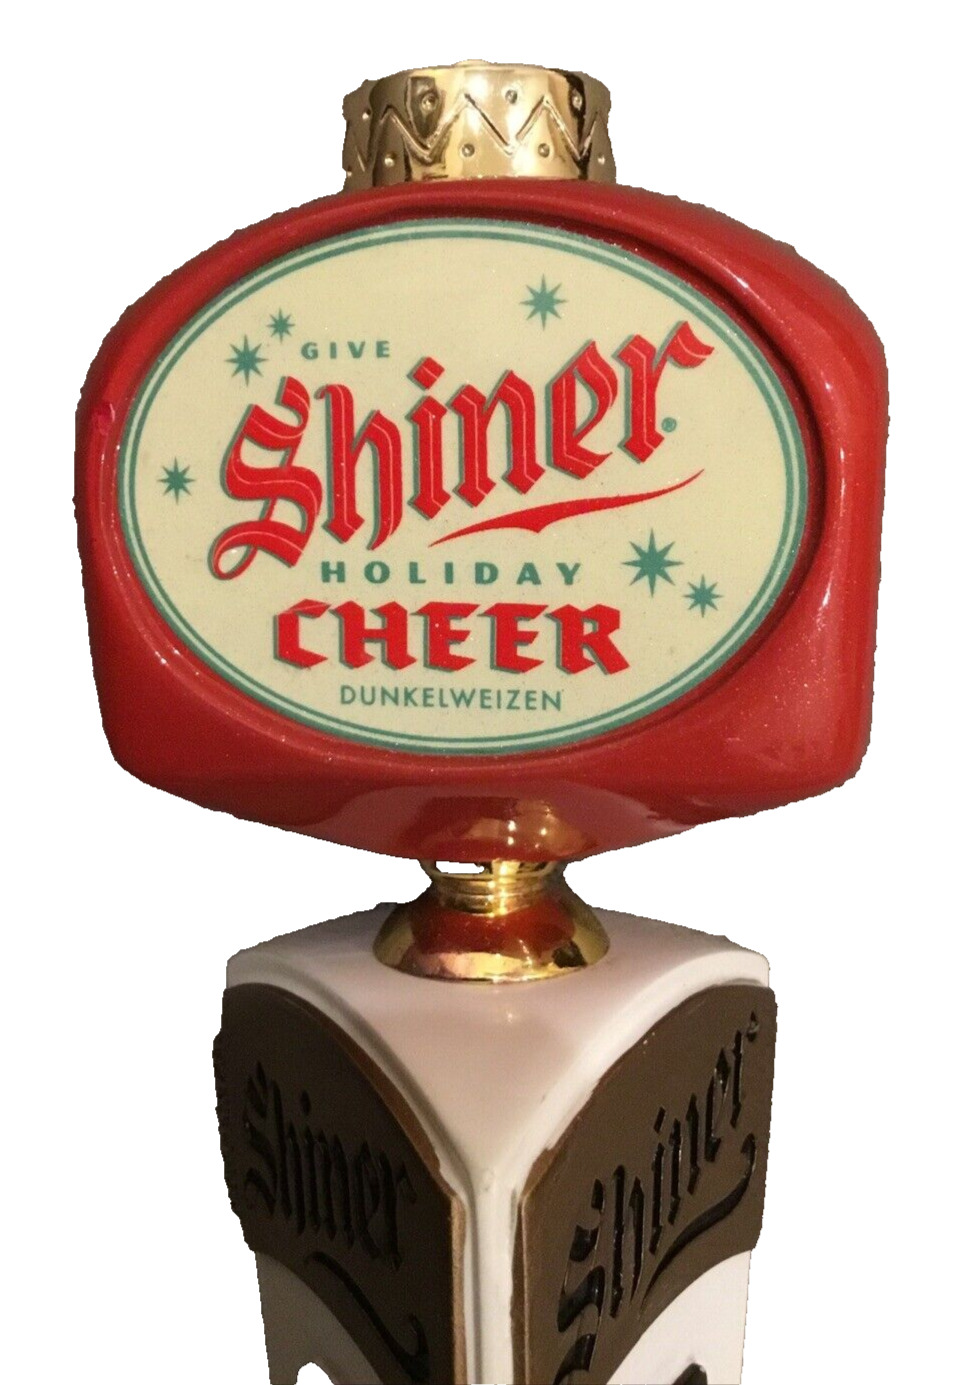 Shiner Cheer Seasonal A most famous Christmas Beer from Shiner Texas